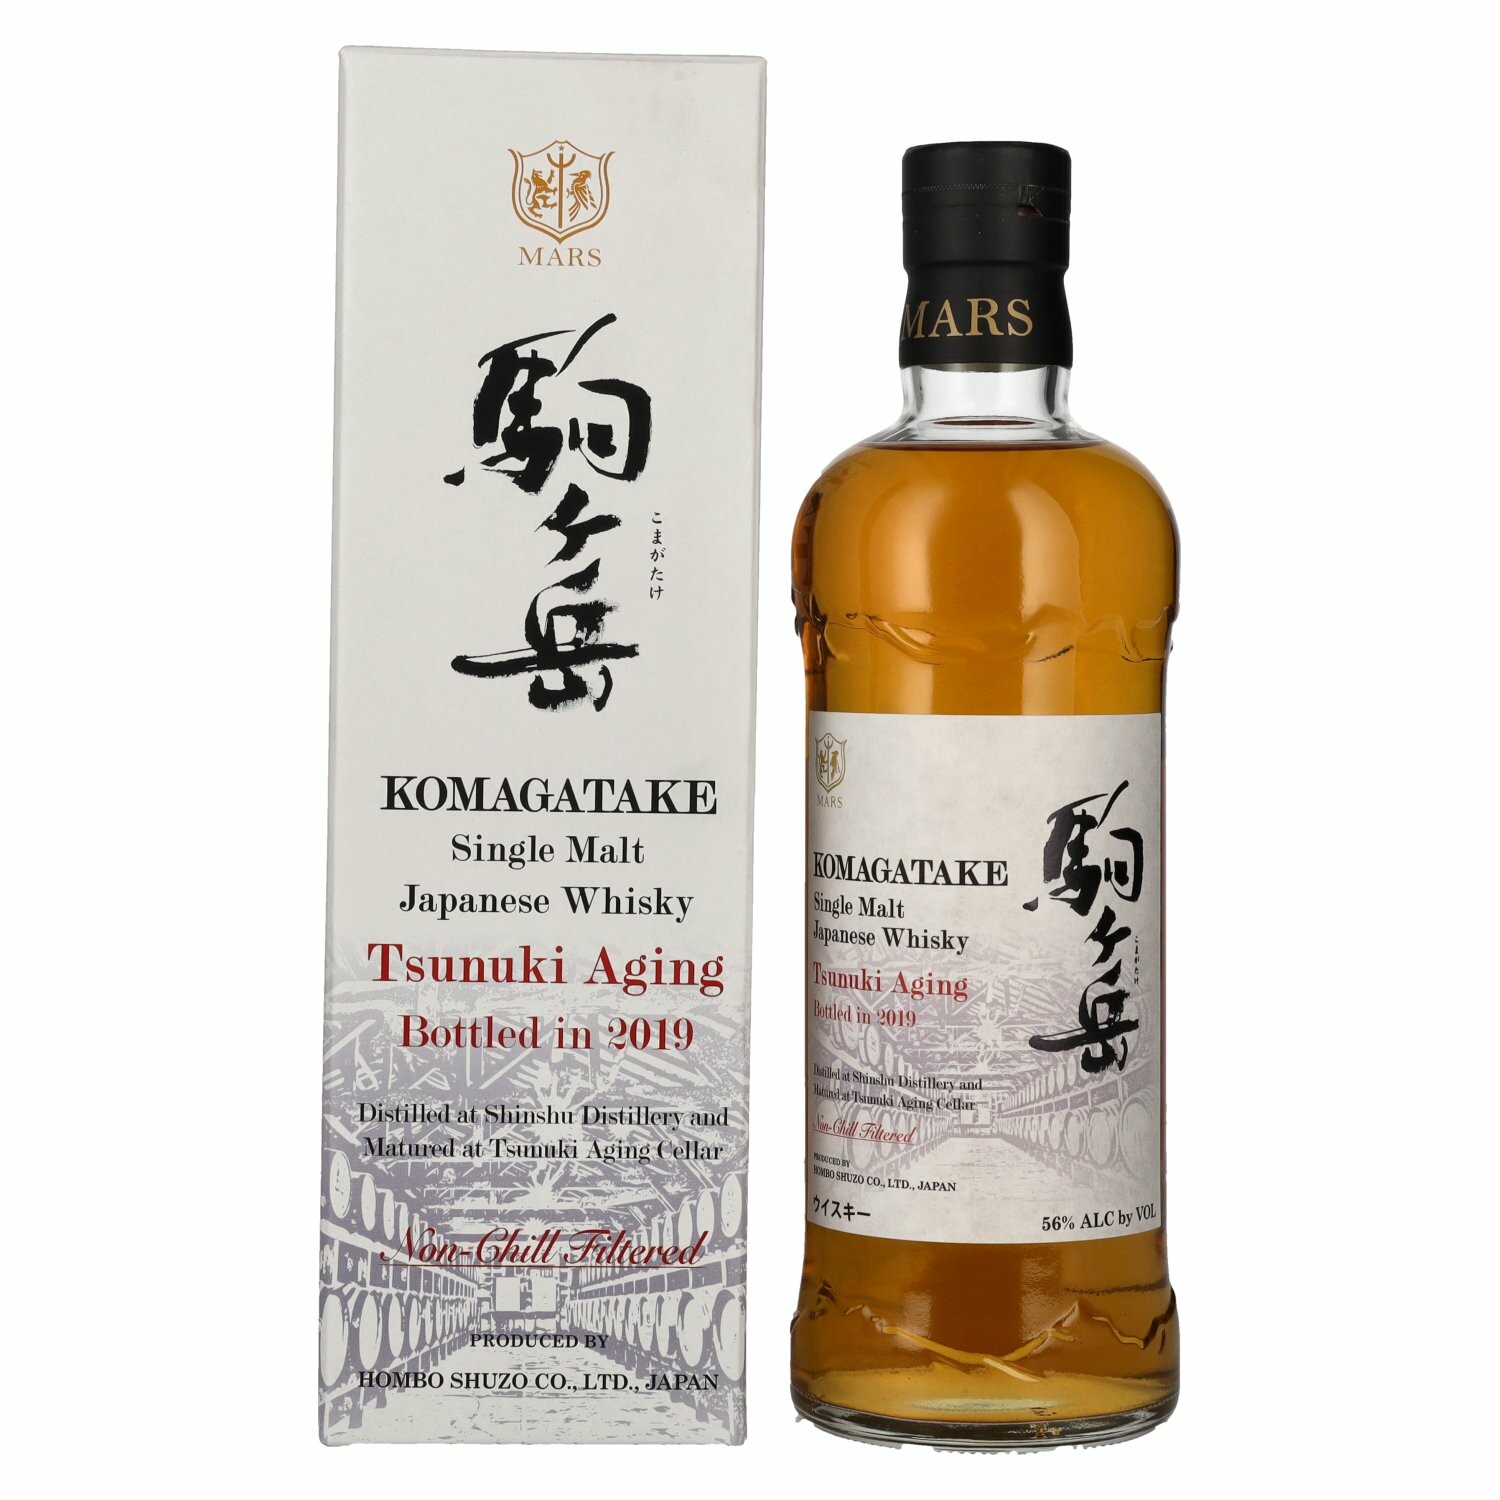 Mars KOMAGATAKE Single Malt Japanese Whisky TSUNUKI AGING 2019 56% Vol. 0,7l in Giftbox